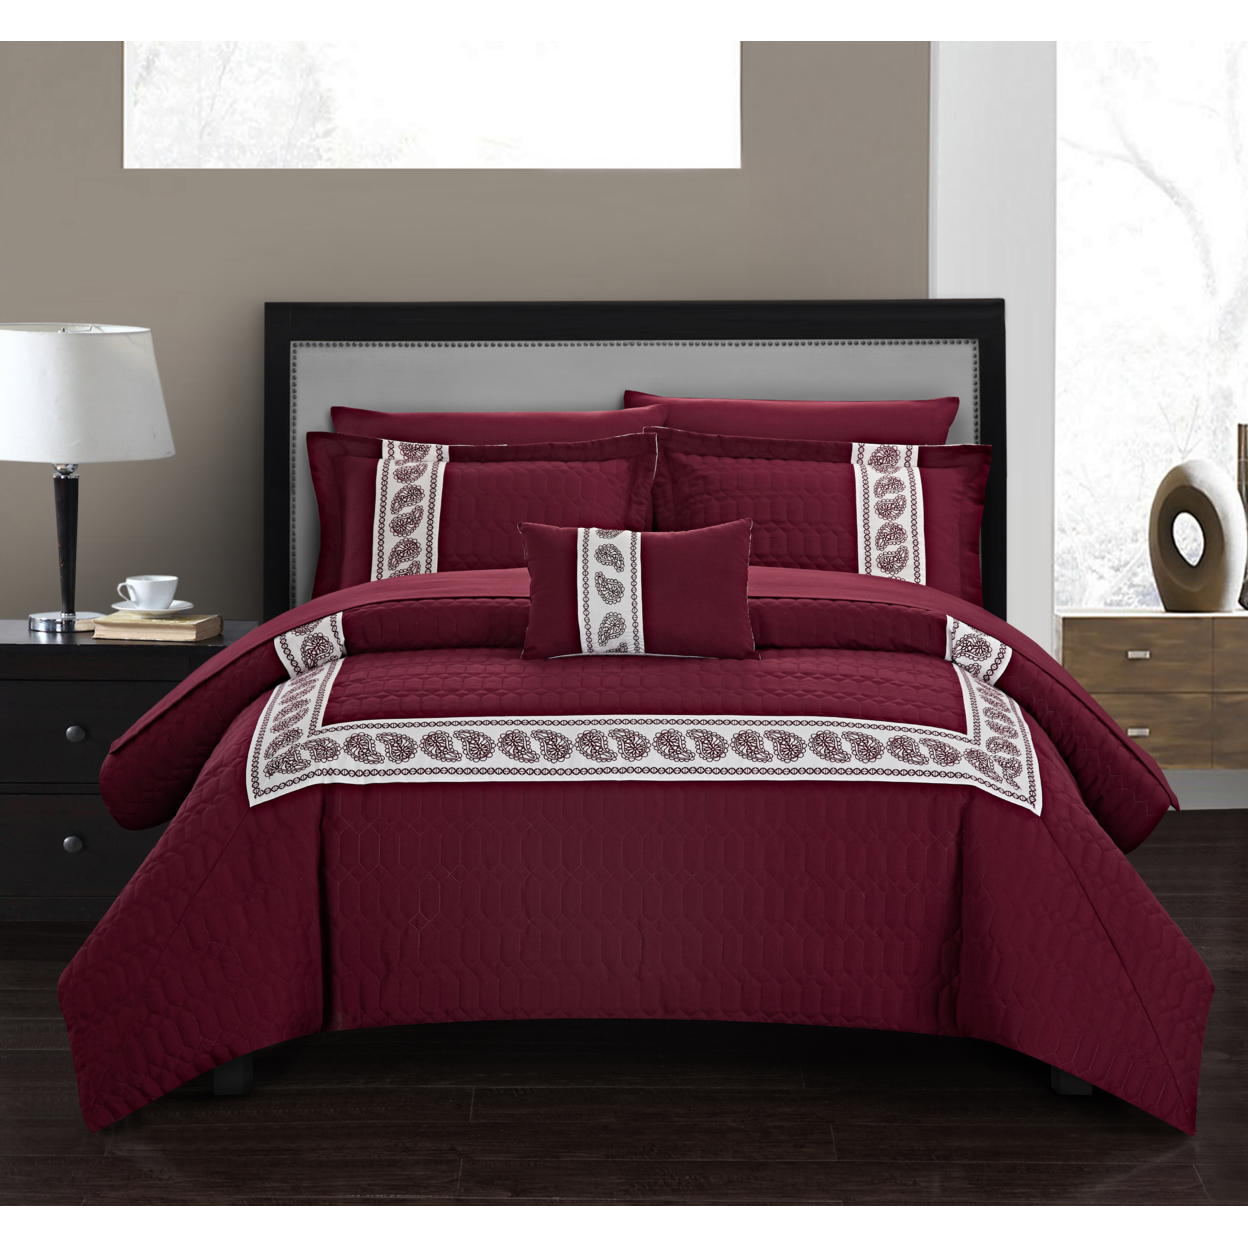 Keegan 8 Or 6 Piece Comforter Set Hotel Collection Hexagon Embossed Paisley Print Border Design Bed In A Bag - Grey, Queen